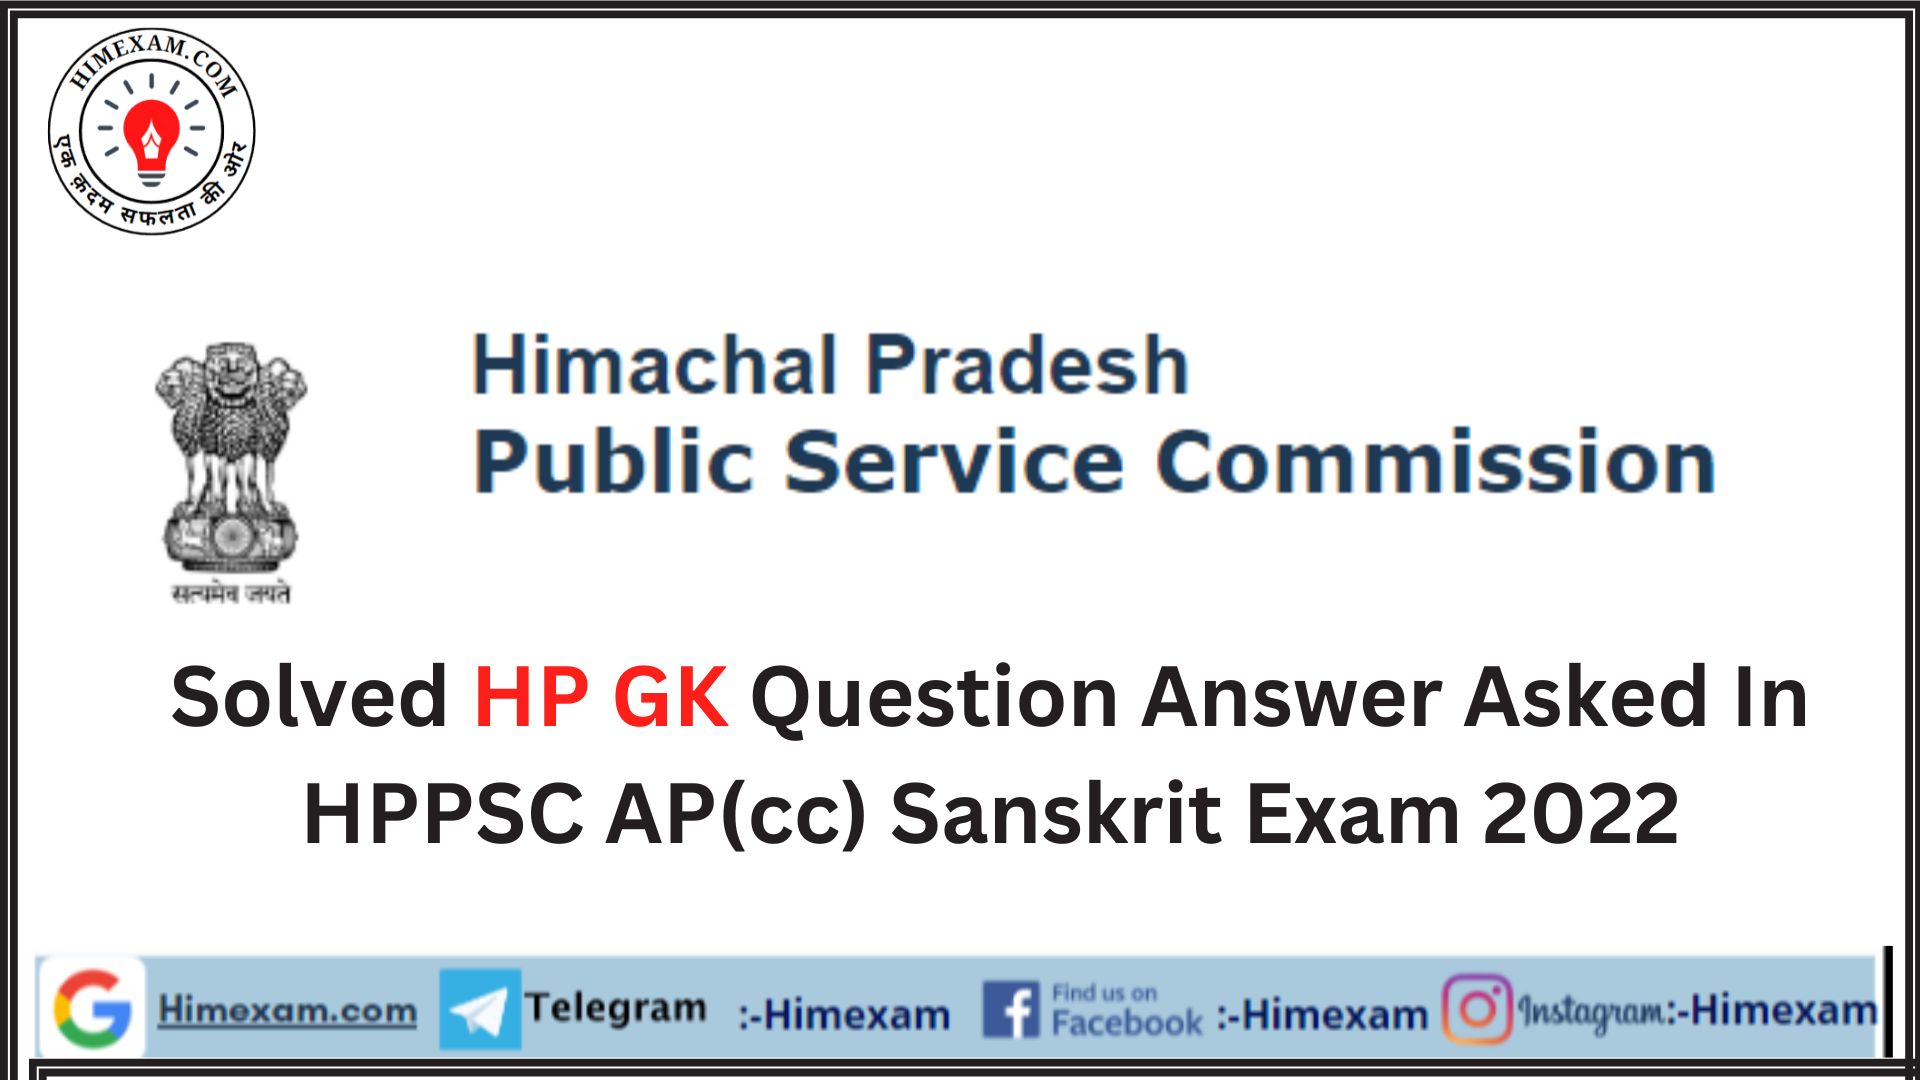 Solved HP GK Question Answer Asked In HPPSC AP(cc) Sanskrit Exam 2022